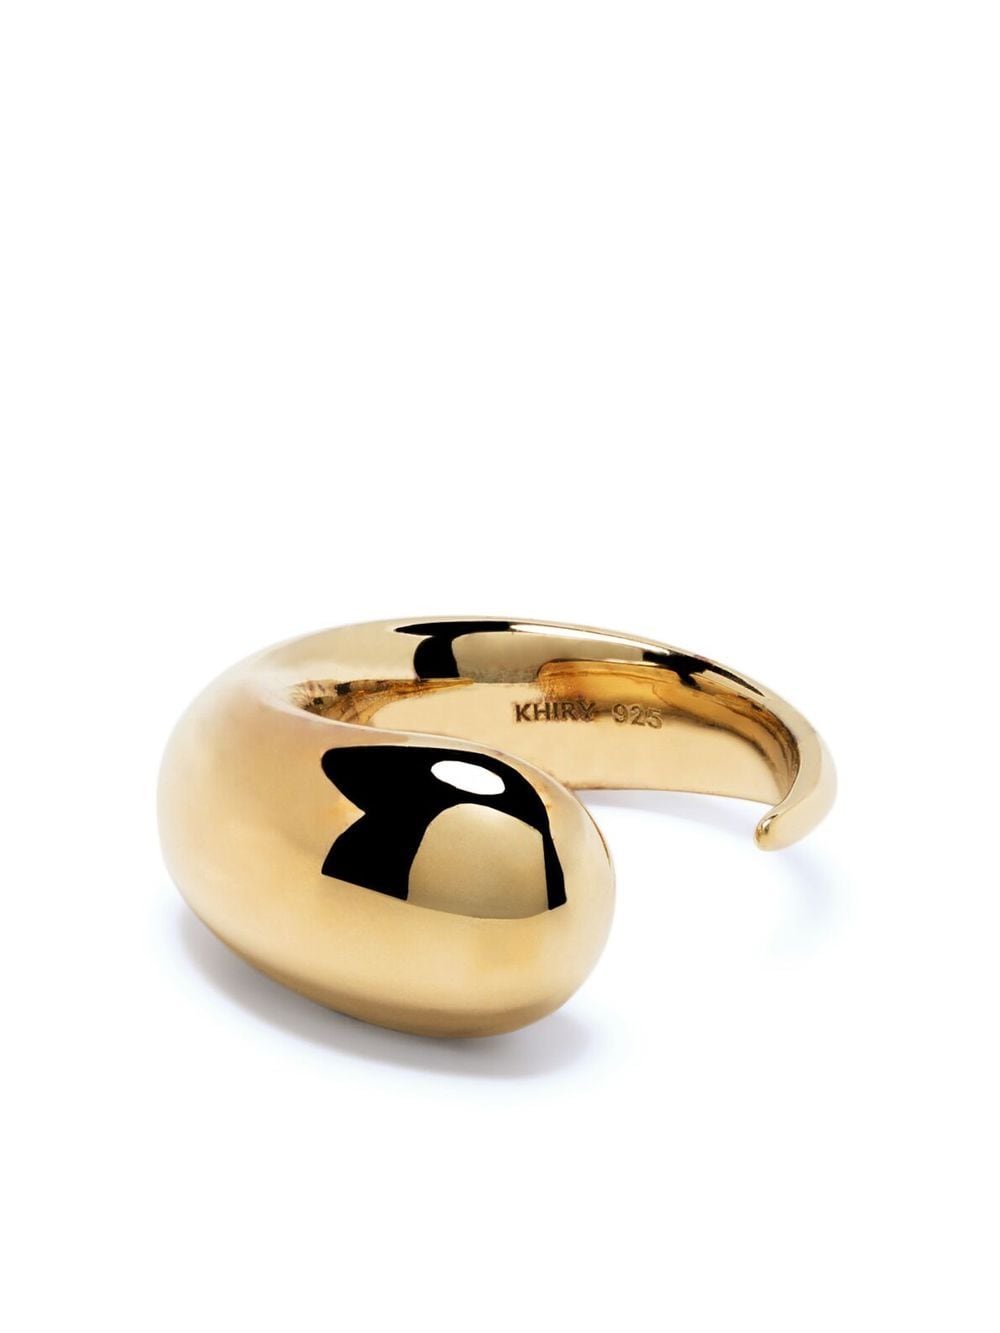 Khartoum gold-plated ring